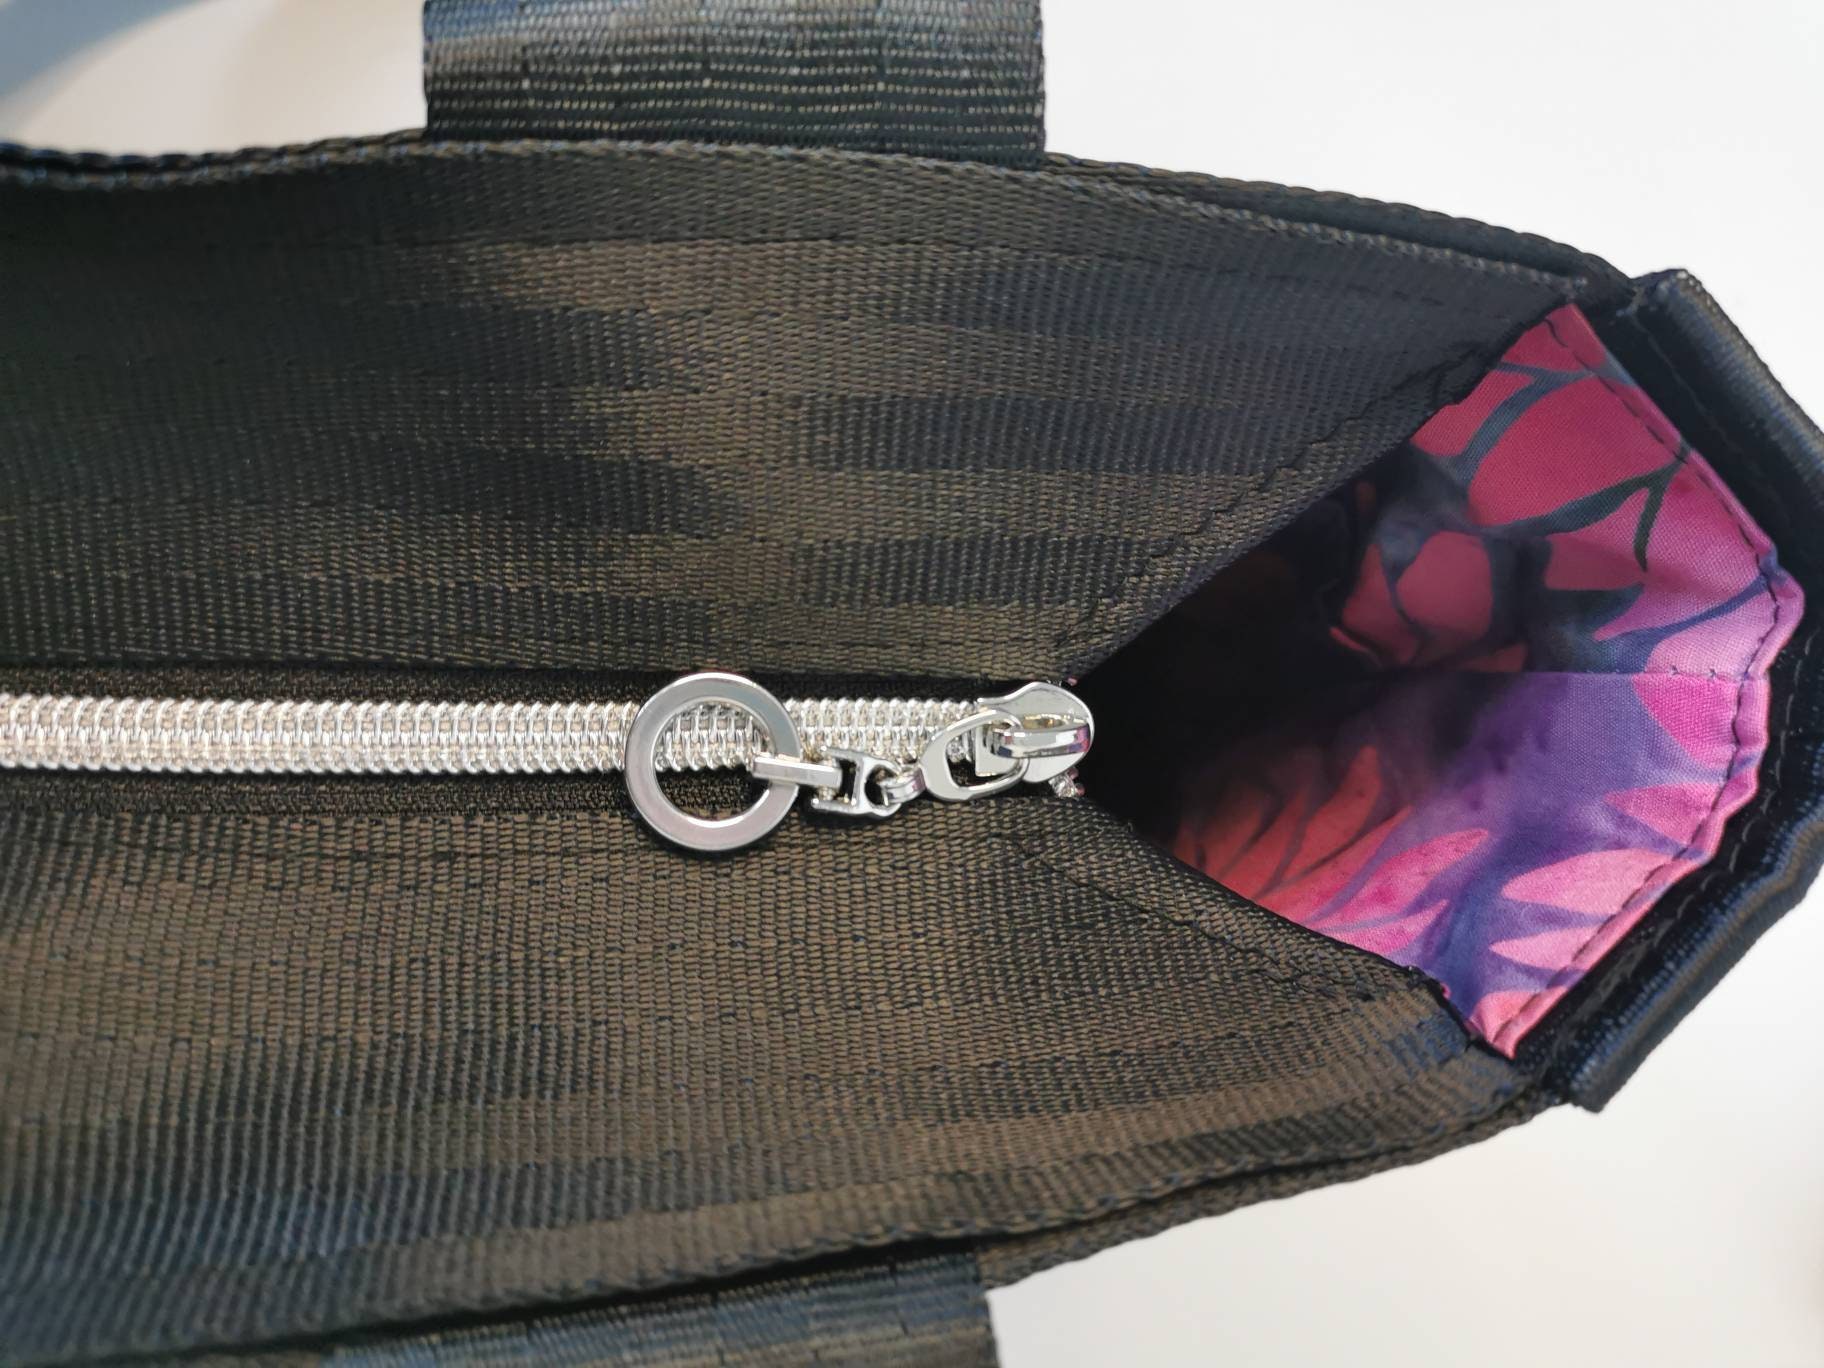 Seatbelt purse for mom ladies handbag holiday gifts | Etsy